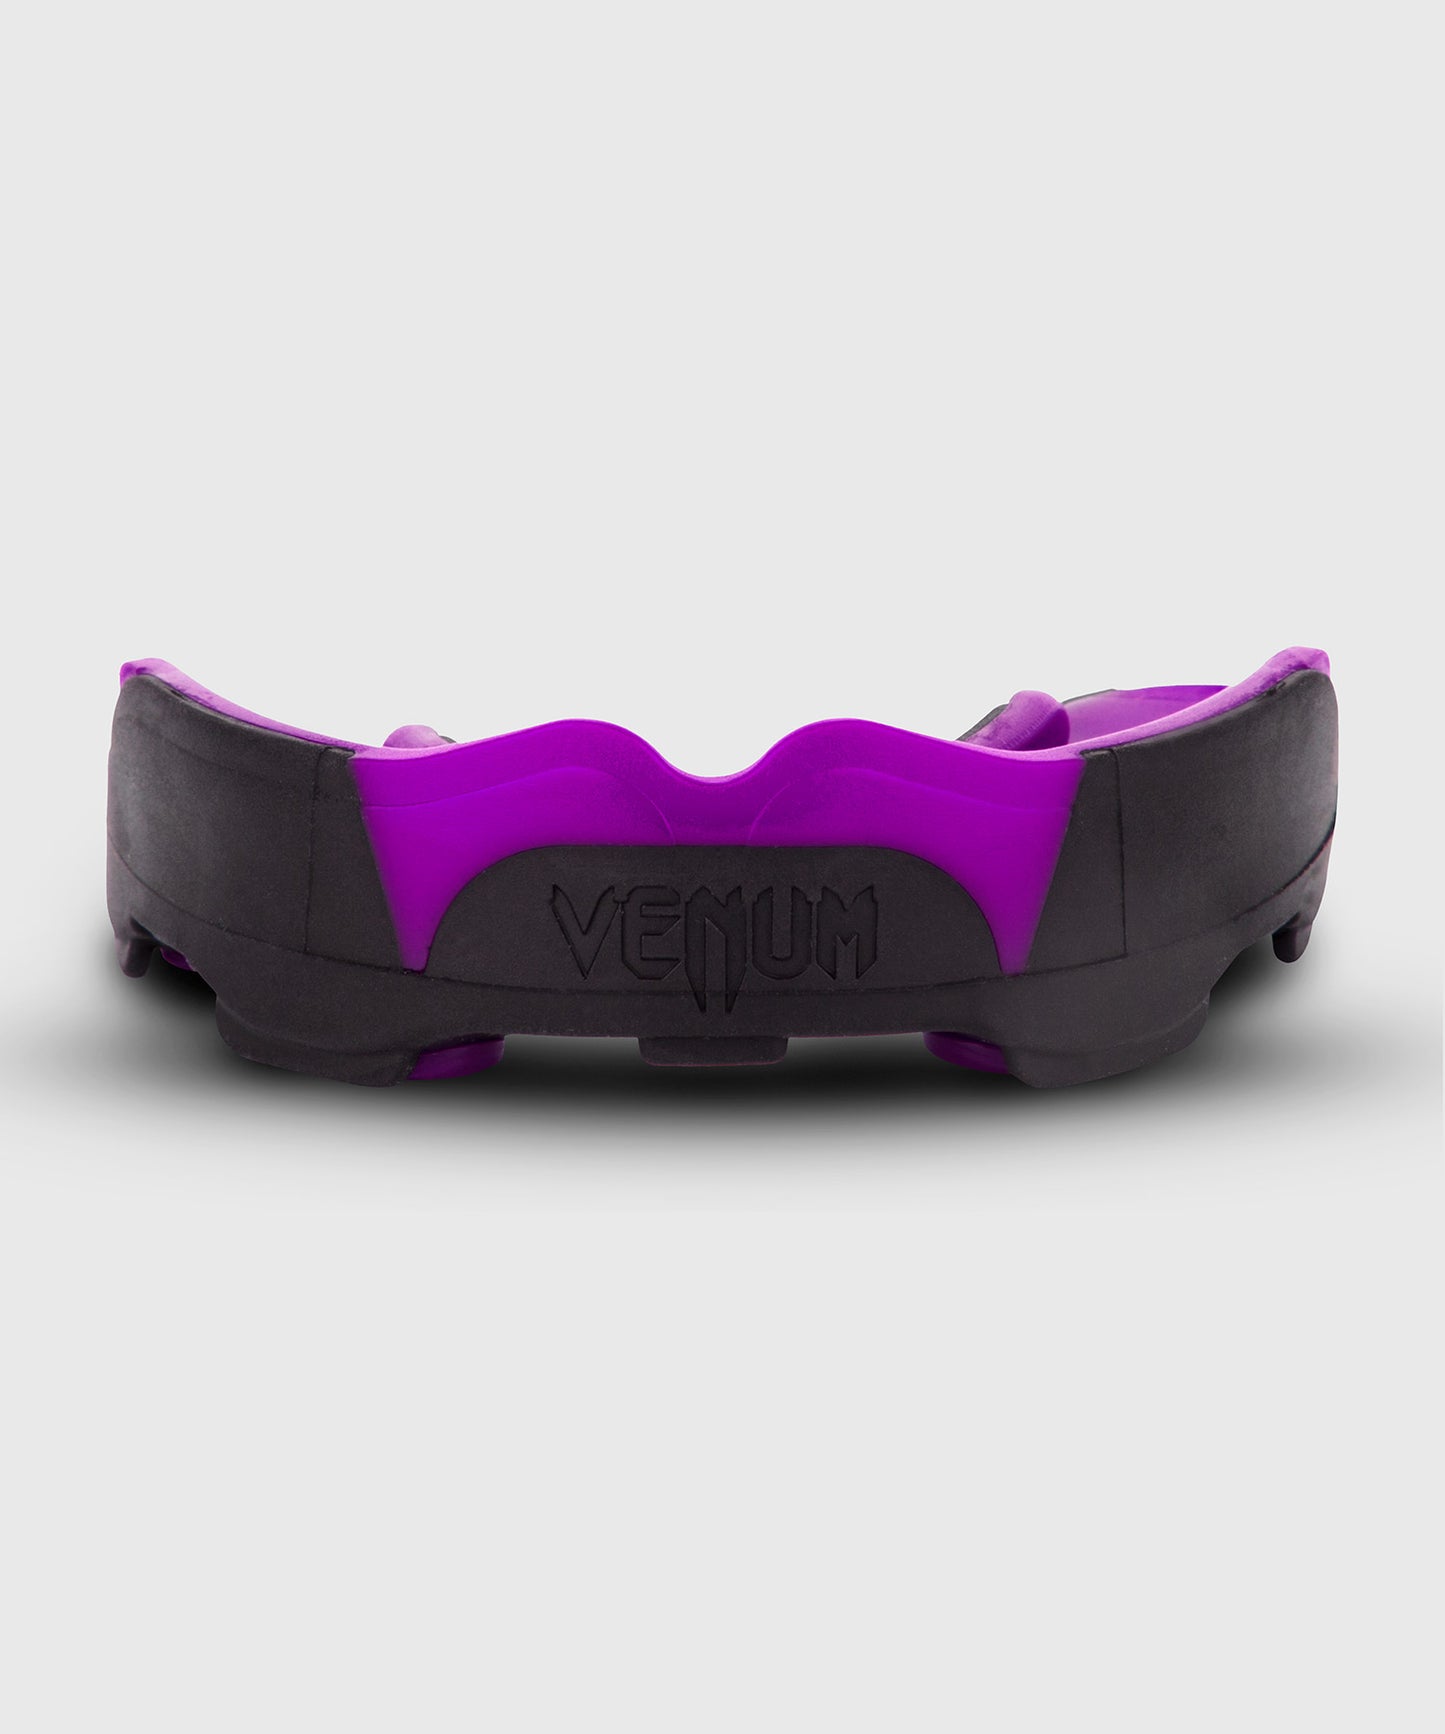 Venum Predator Mouthguard - Black/Purple